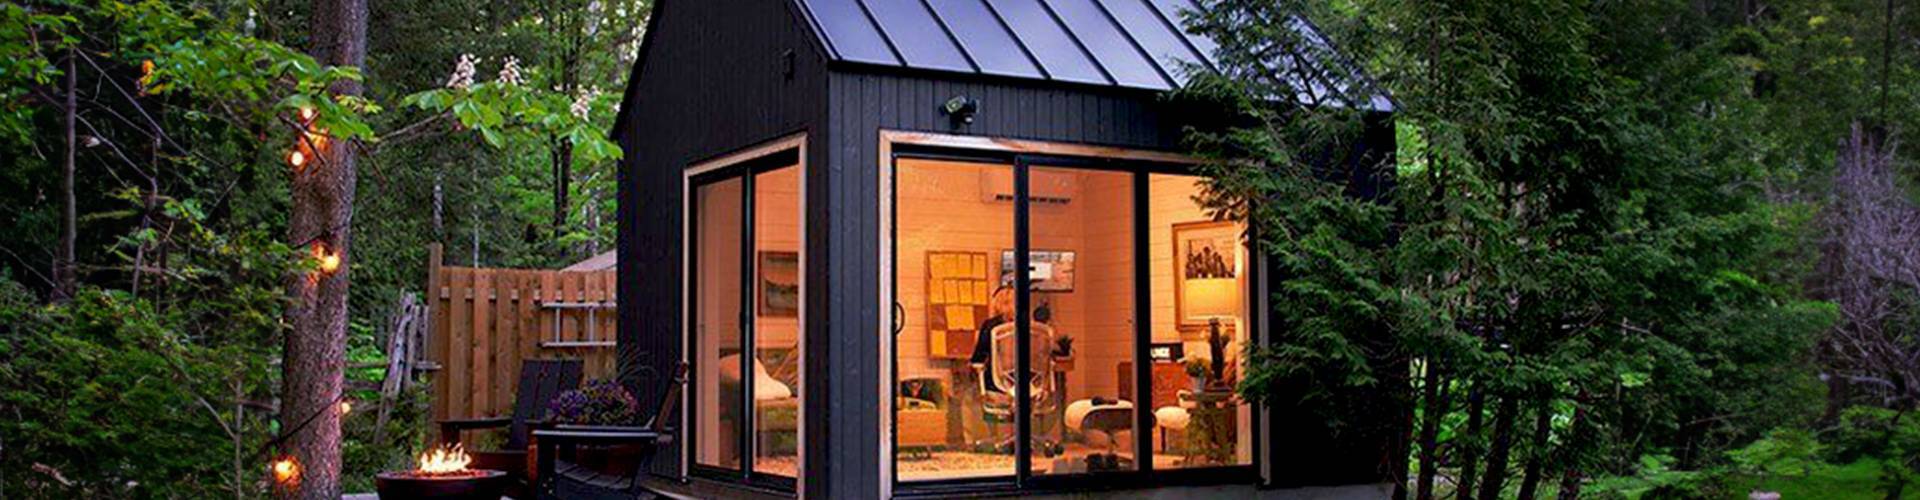 Backyard Prefab Mini Oban home office studio Kit - Summerwood Products